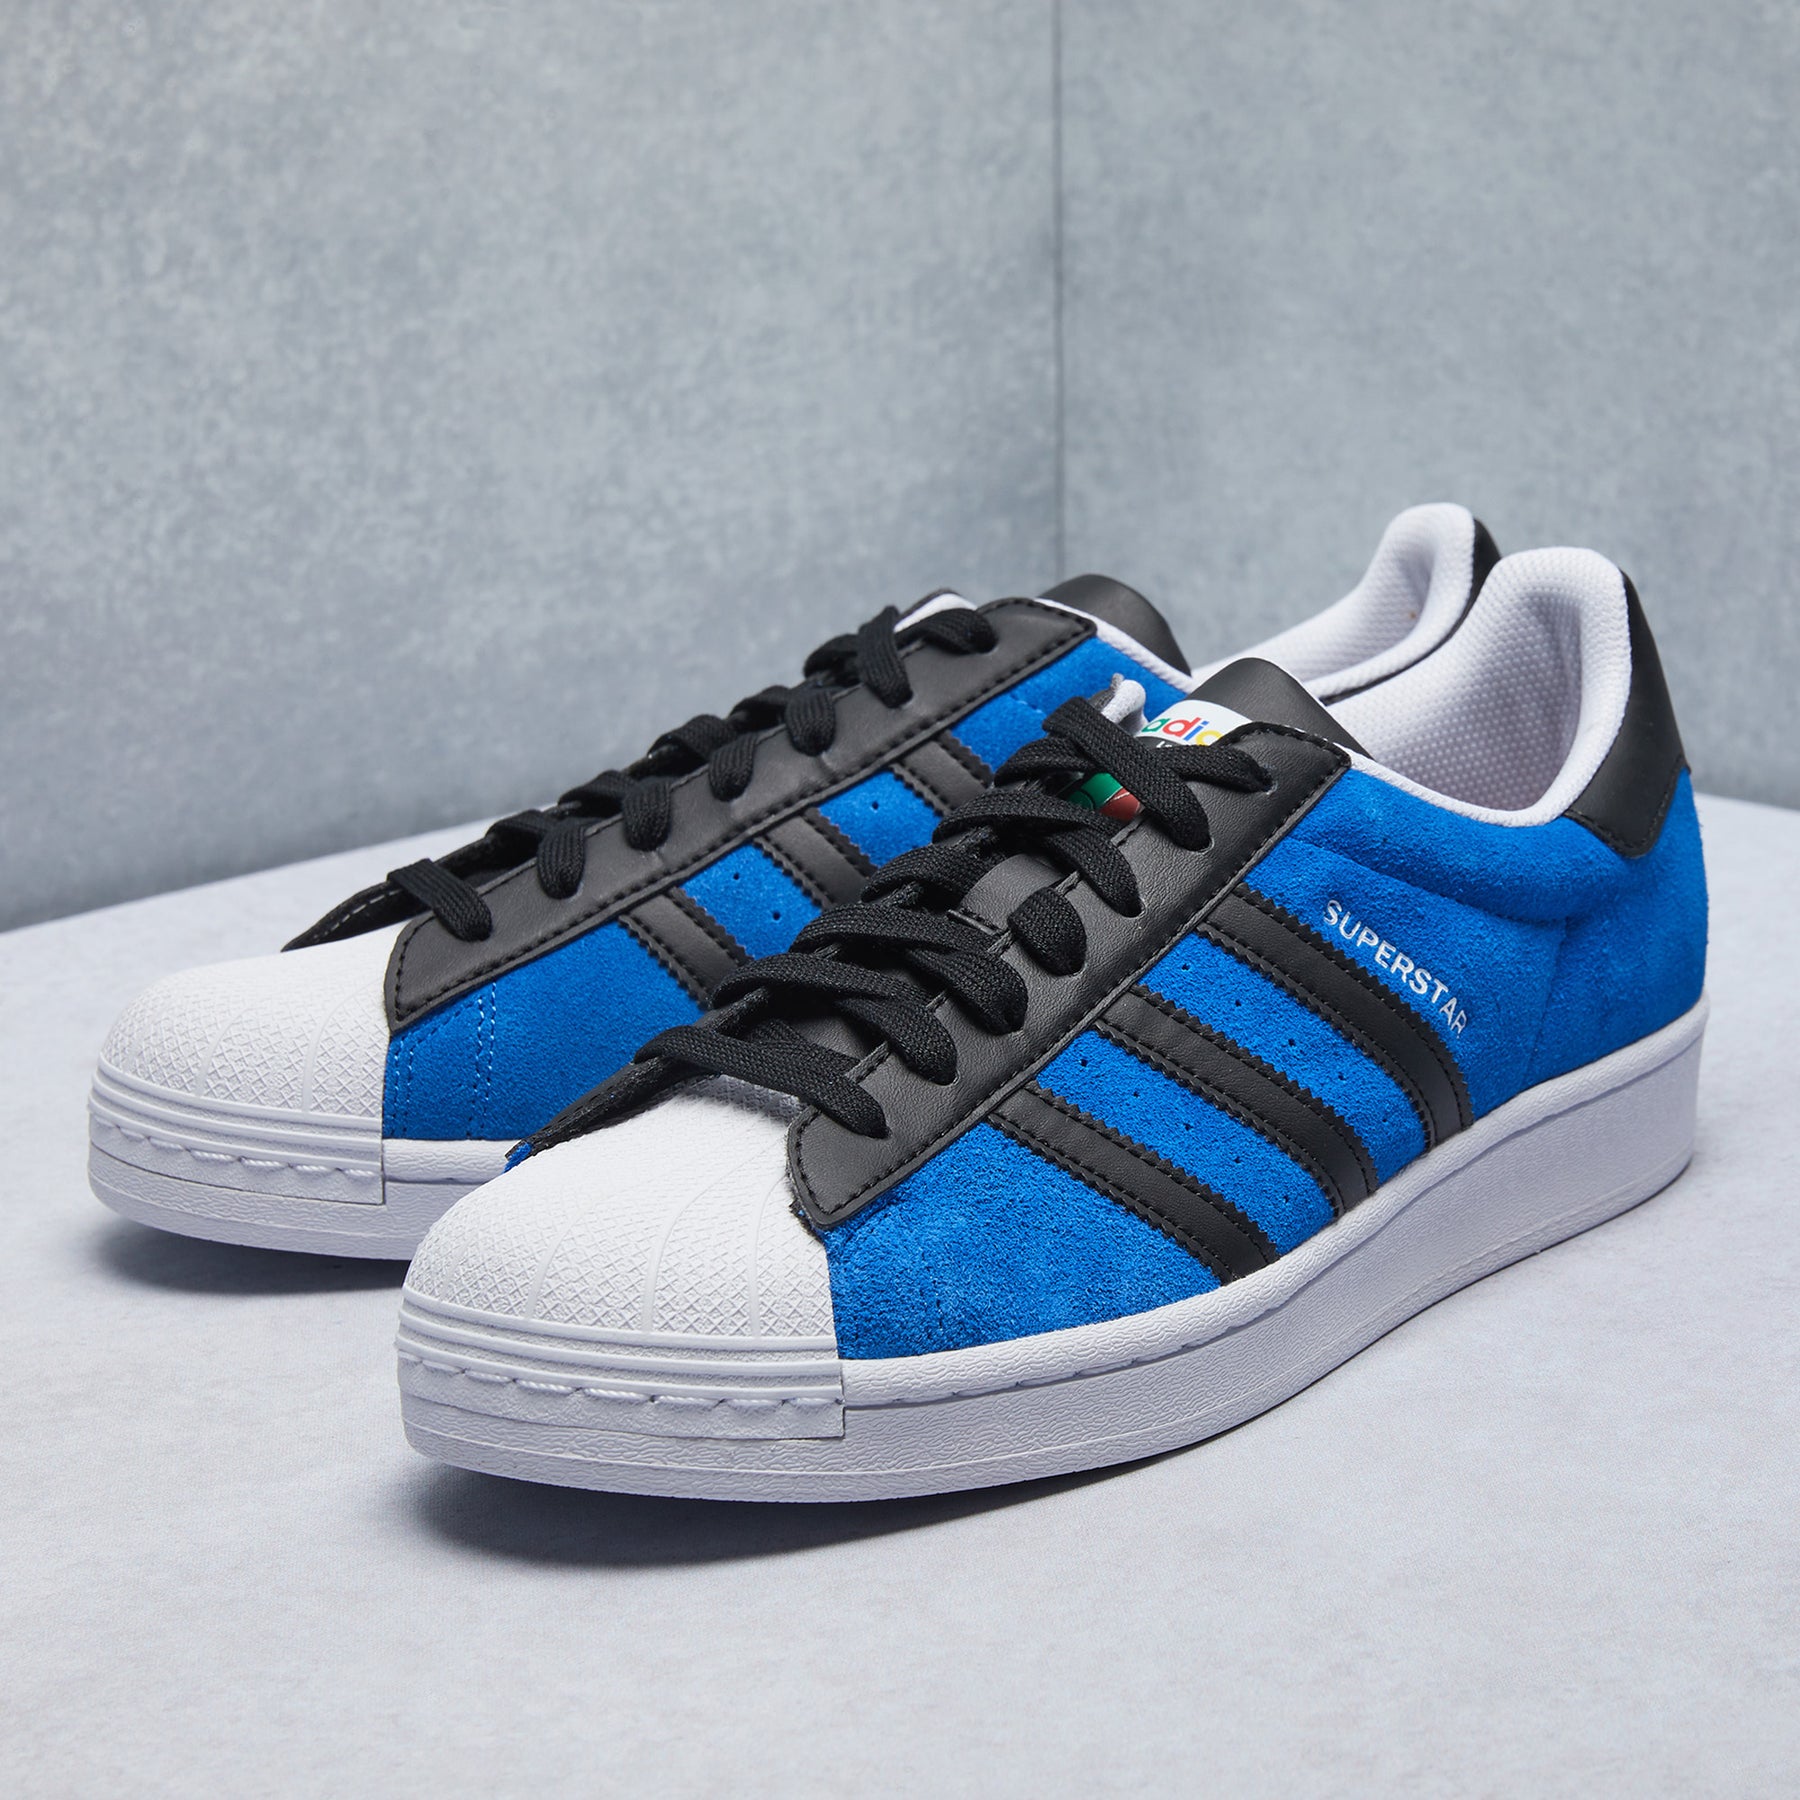 Adidas Originals Superstar Shoe Dropkick 9844